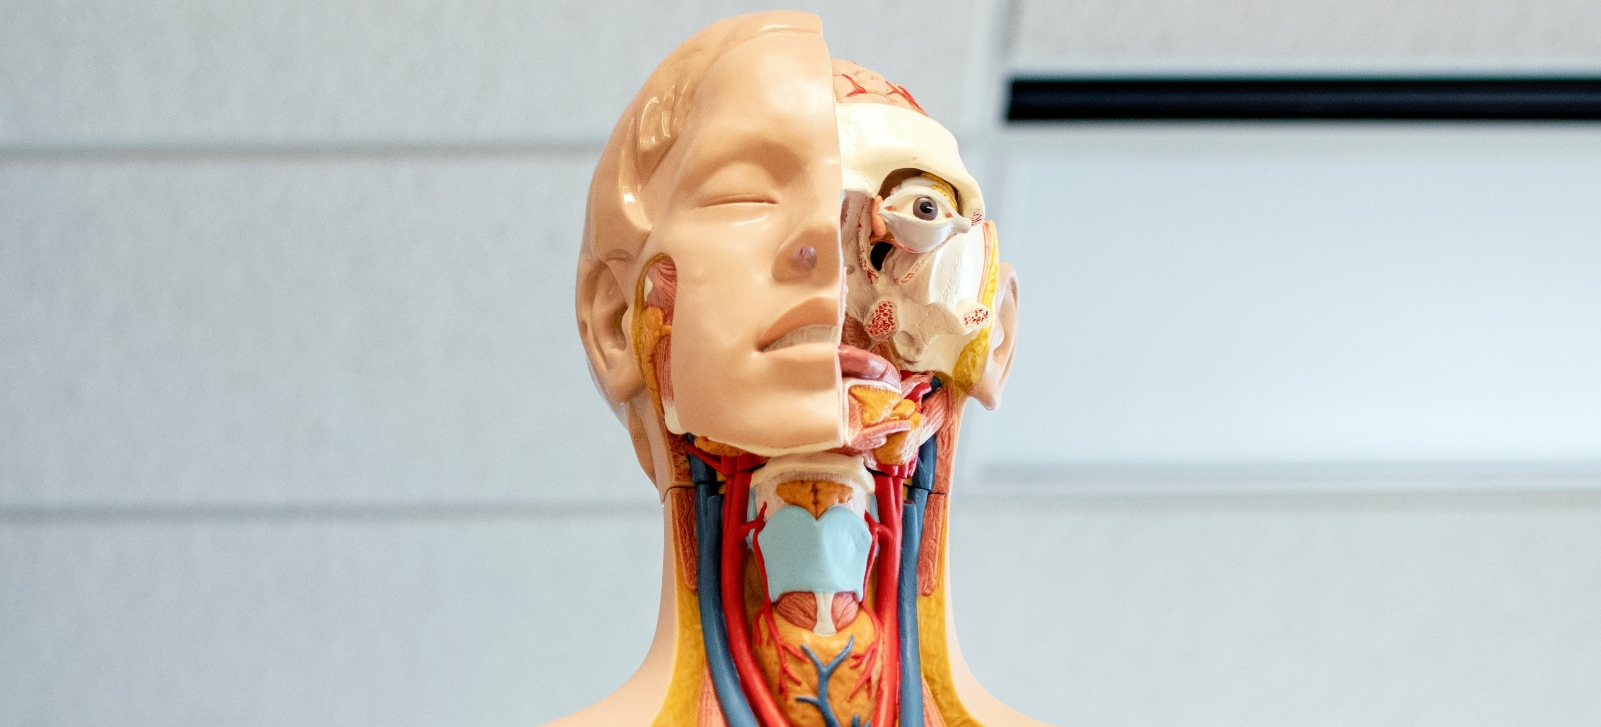 plastic model of human body